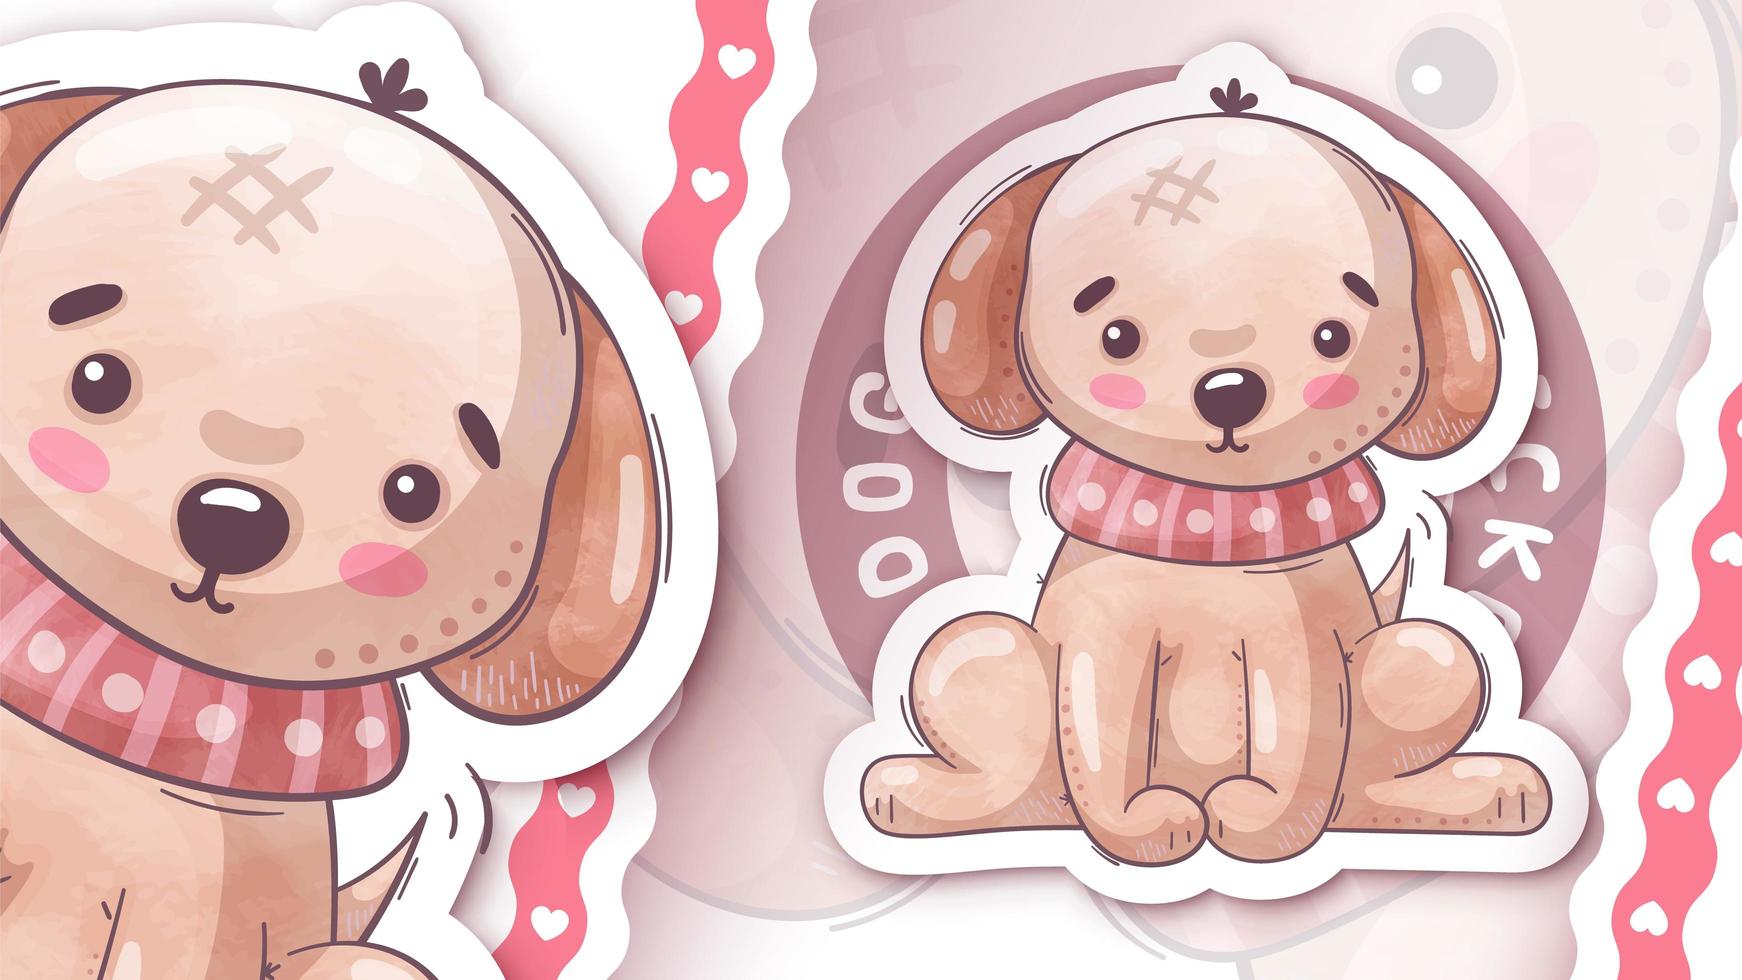 Cute puppy dog in sticker style vector